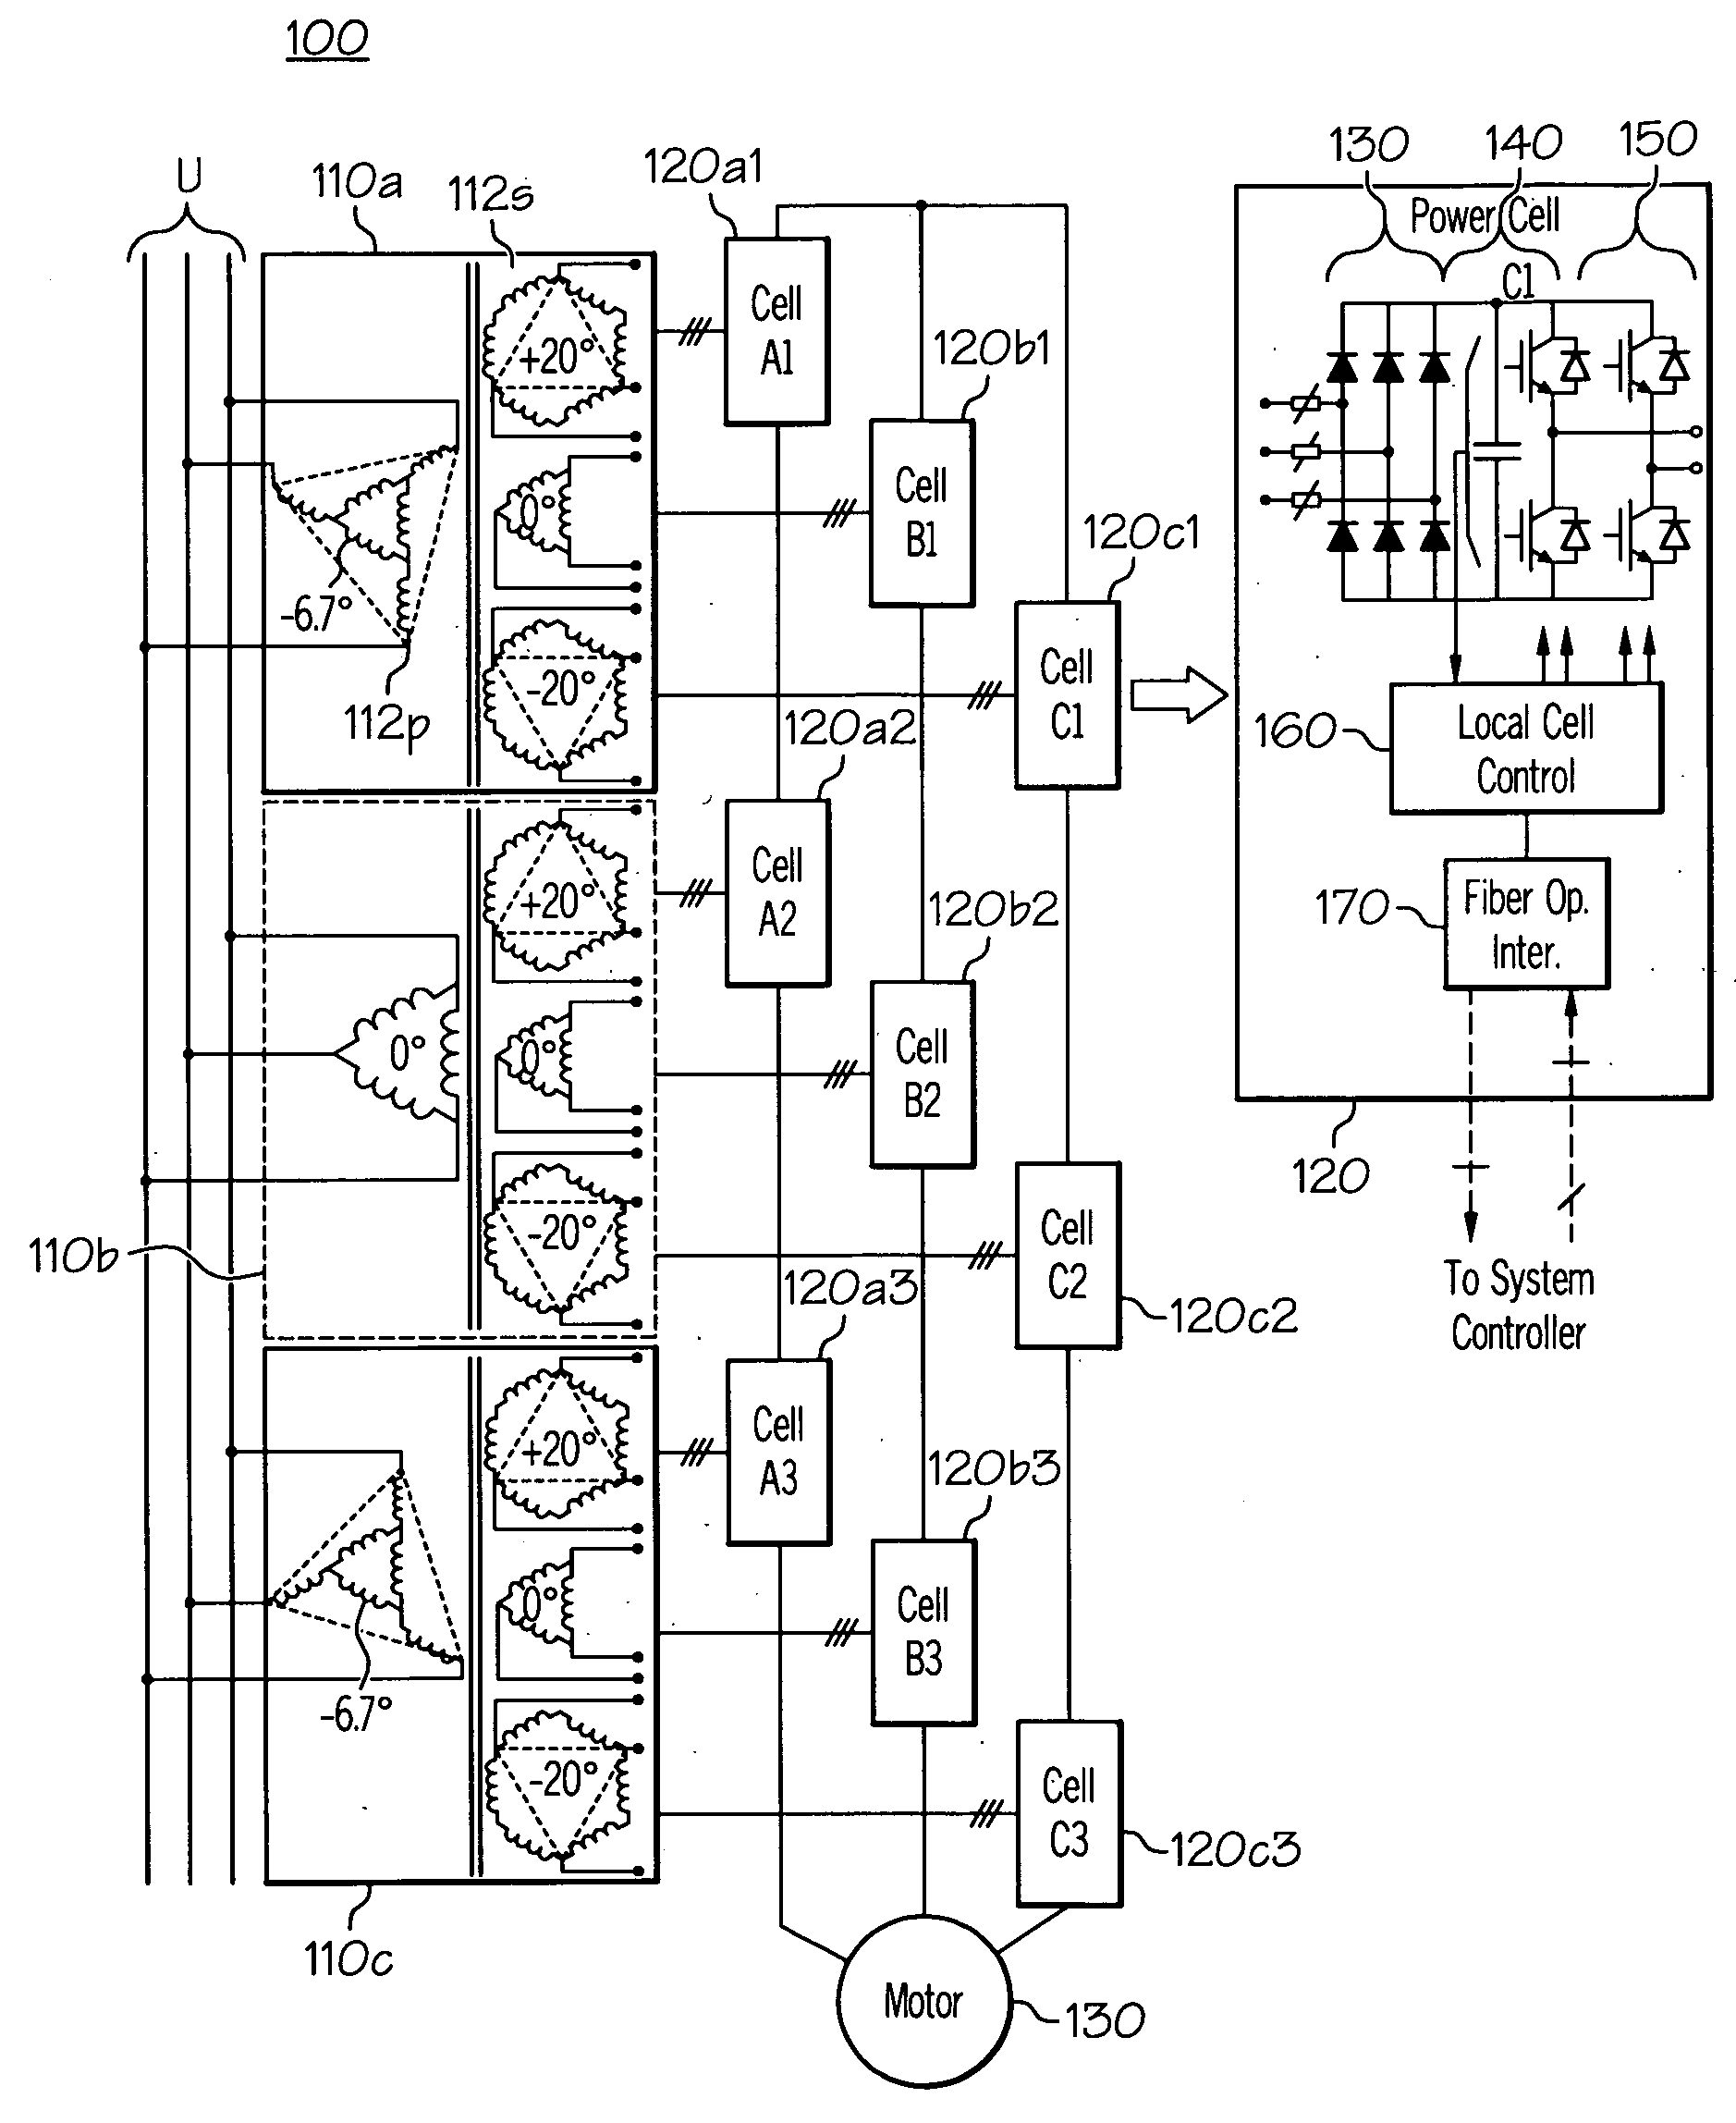 Modular multi-pulse transformer rectifier for use in asymmetric multi-level power converter